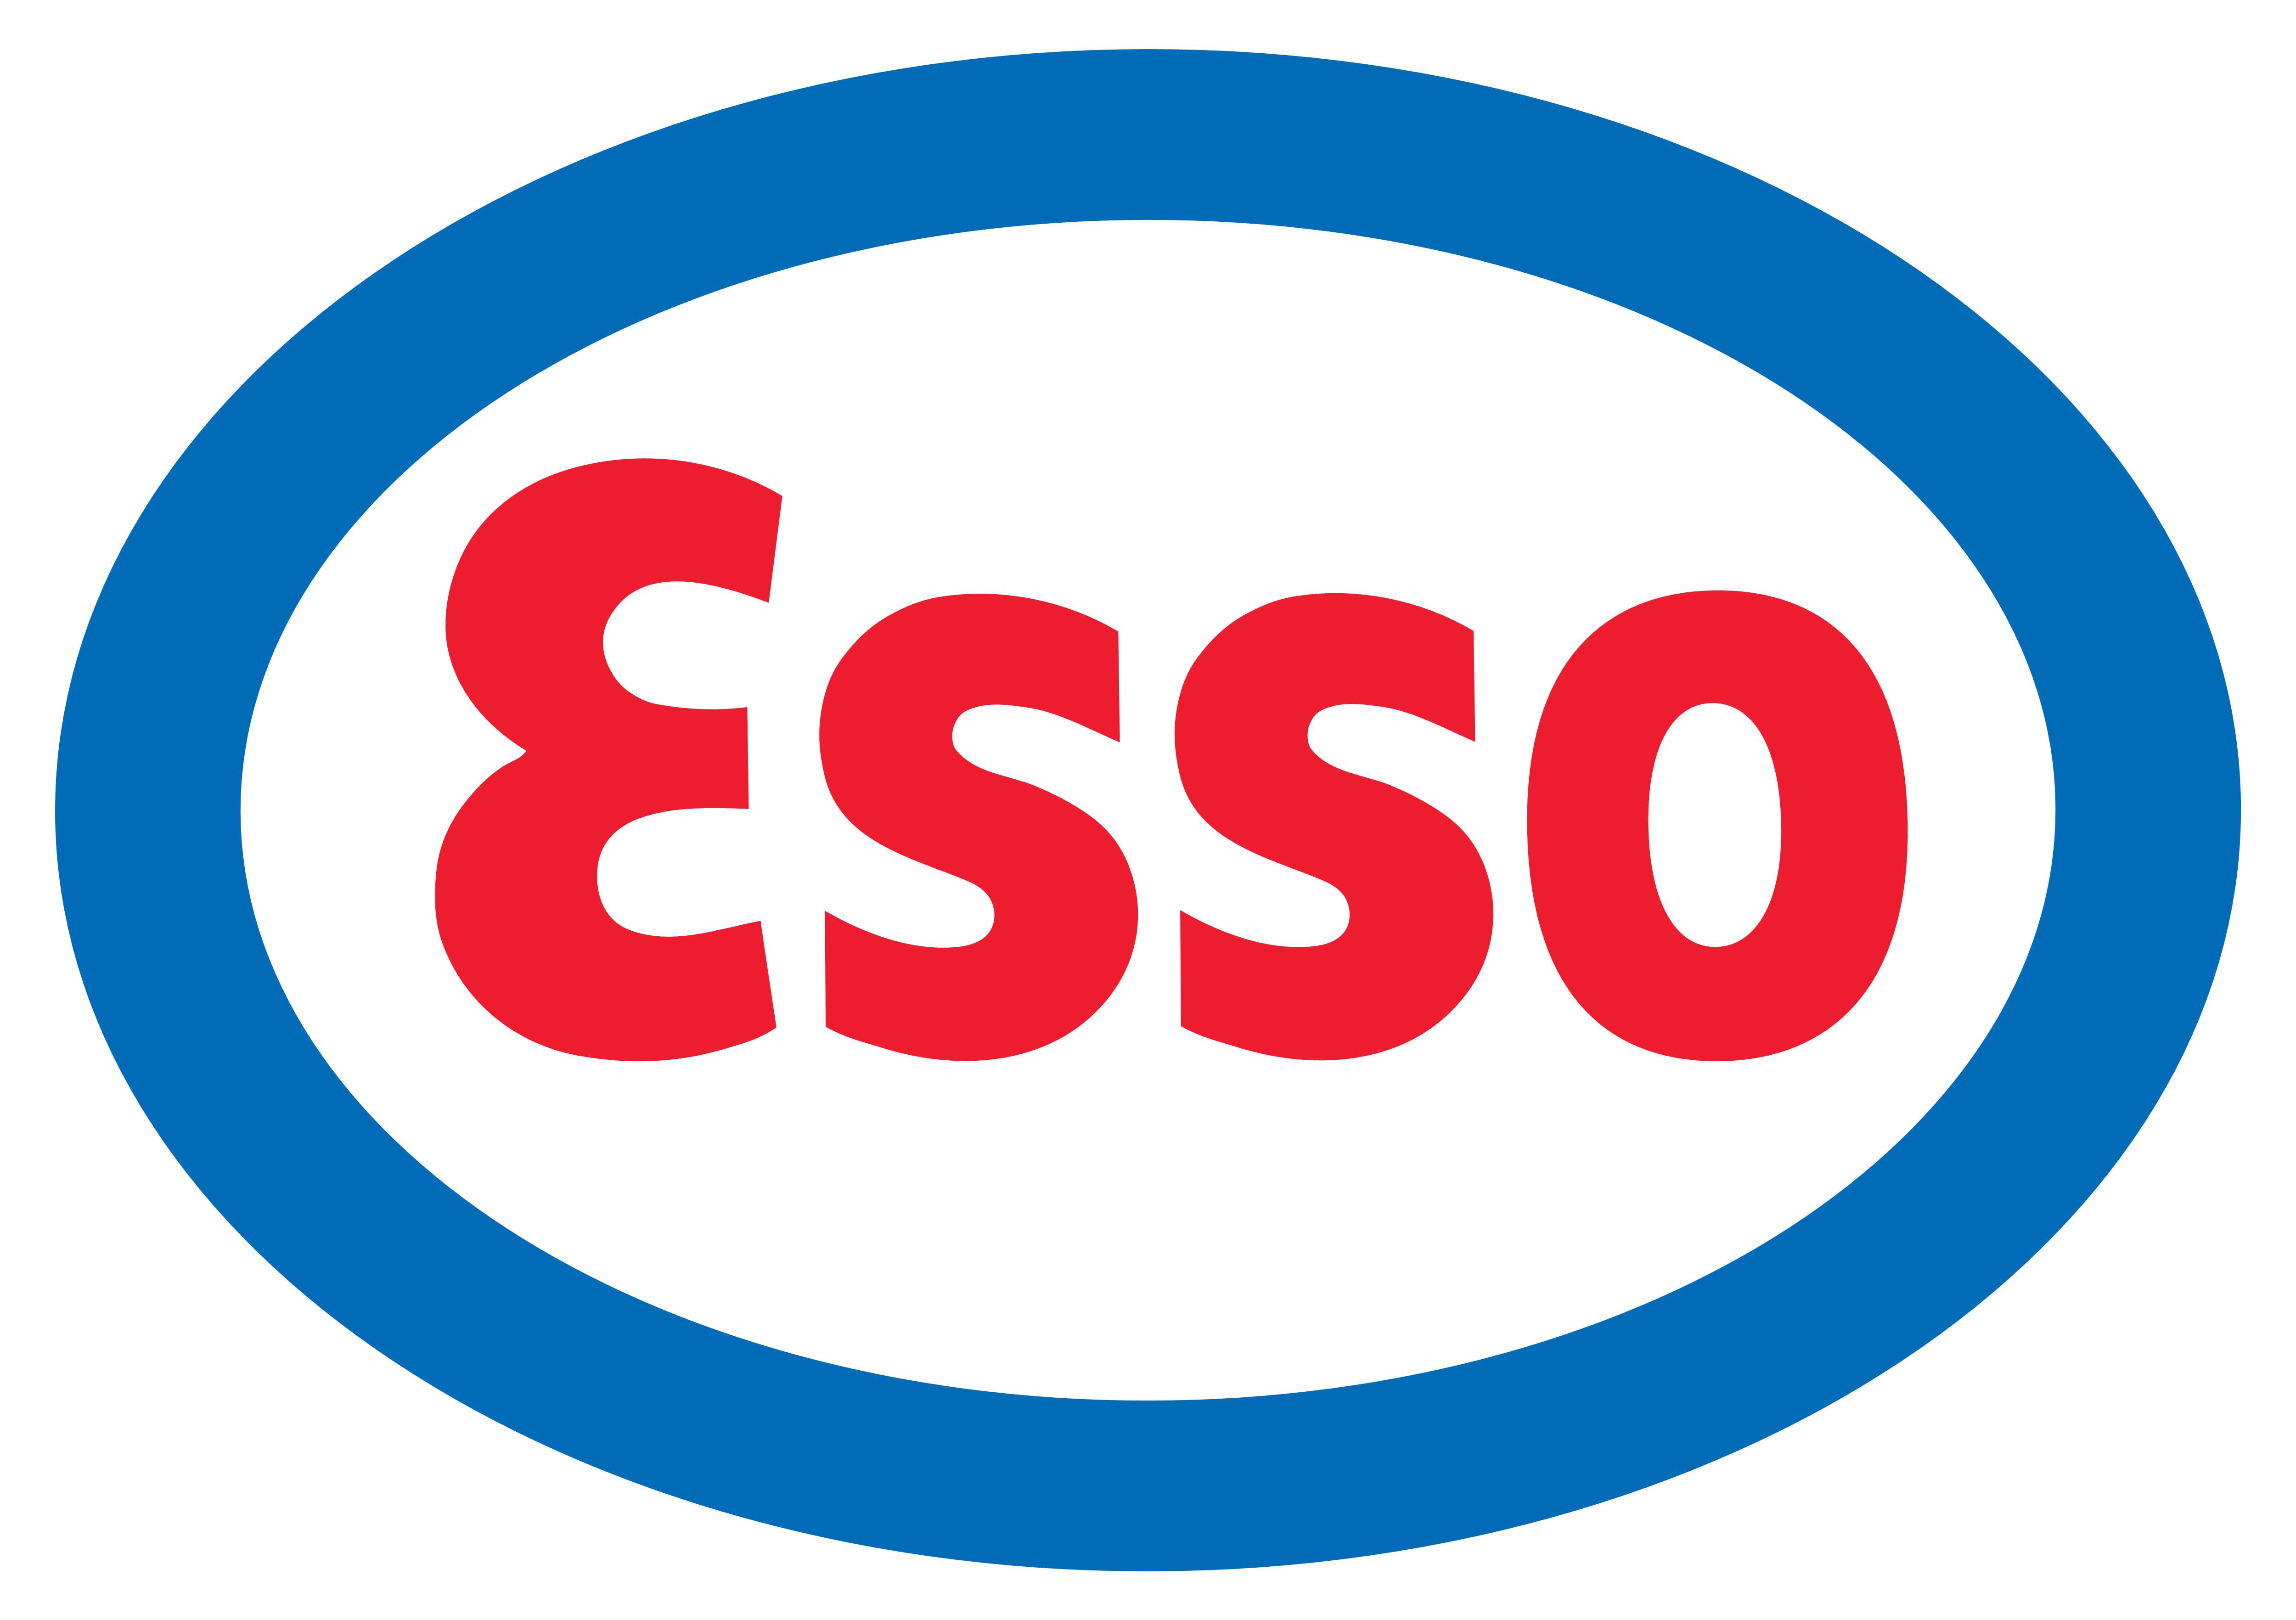 Esso – Logos Download